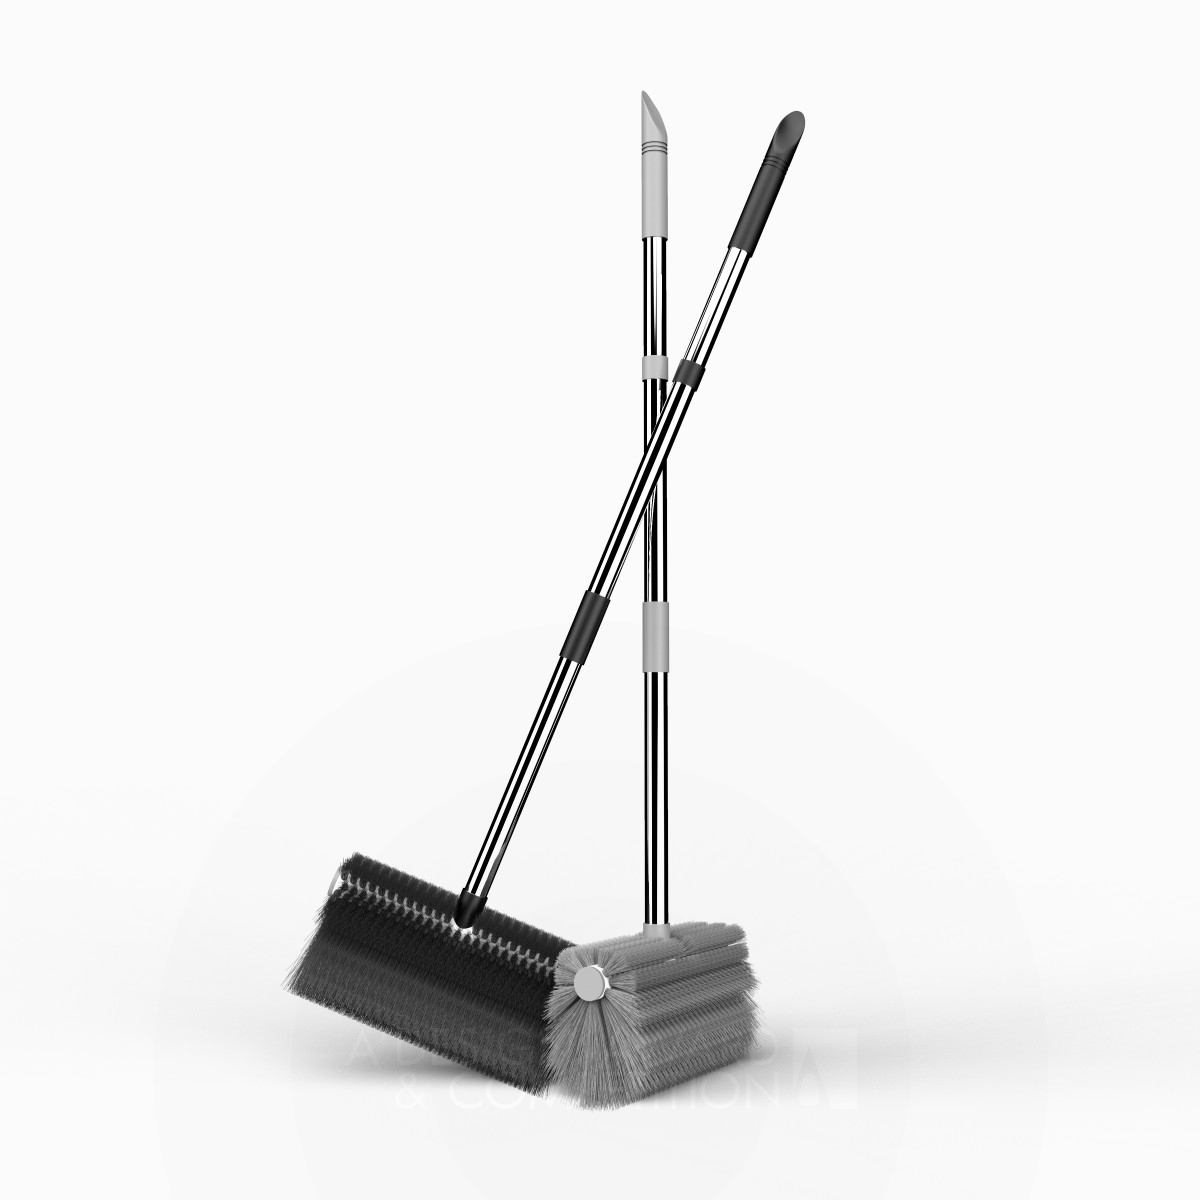  Multi Angle Cleaning Broom